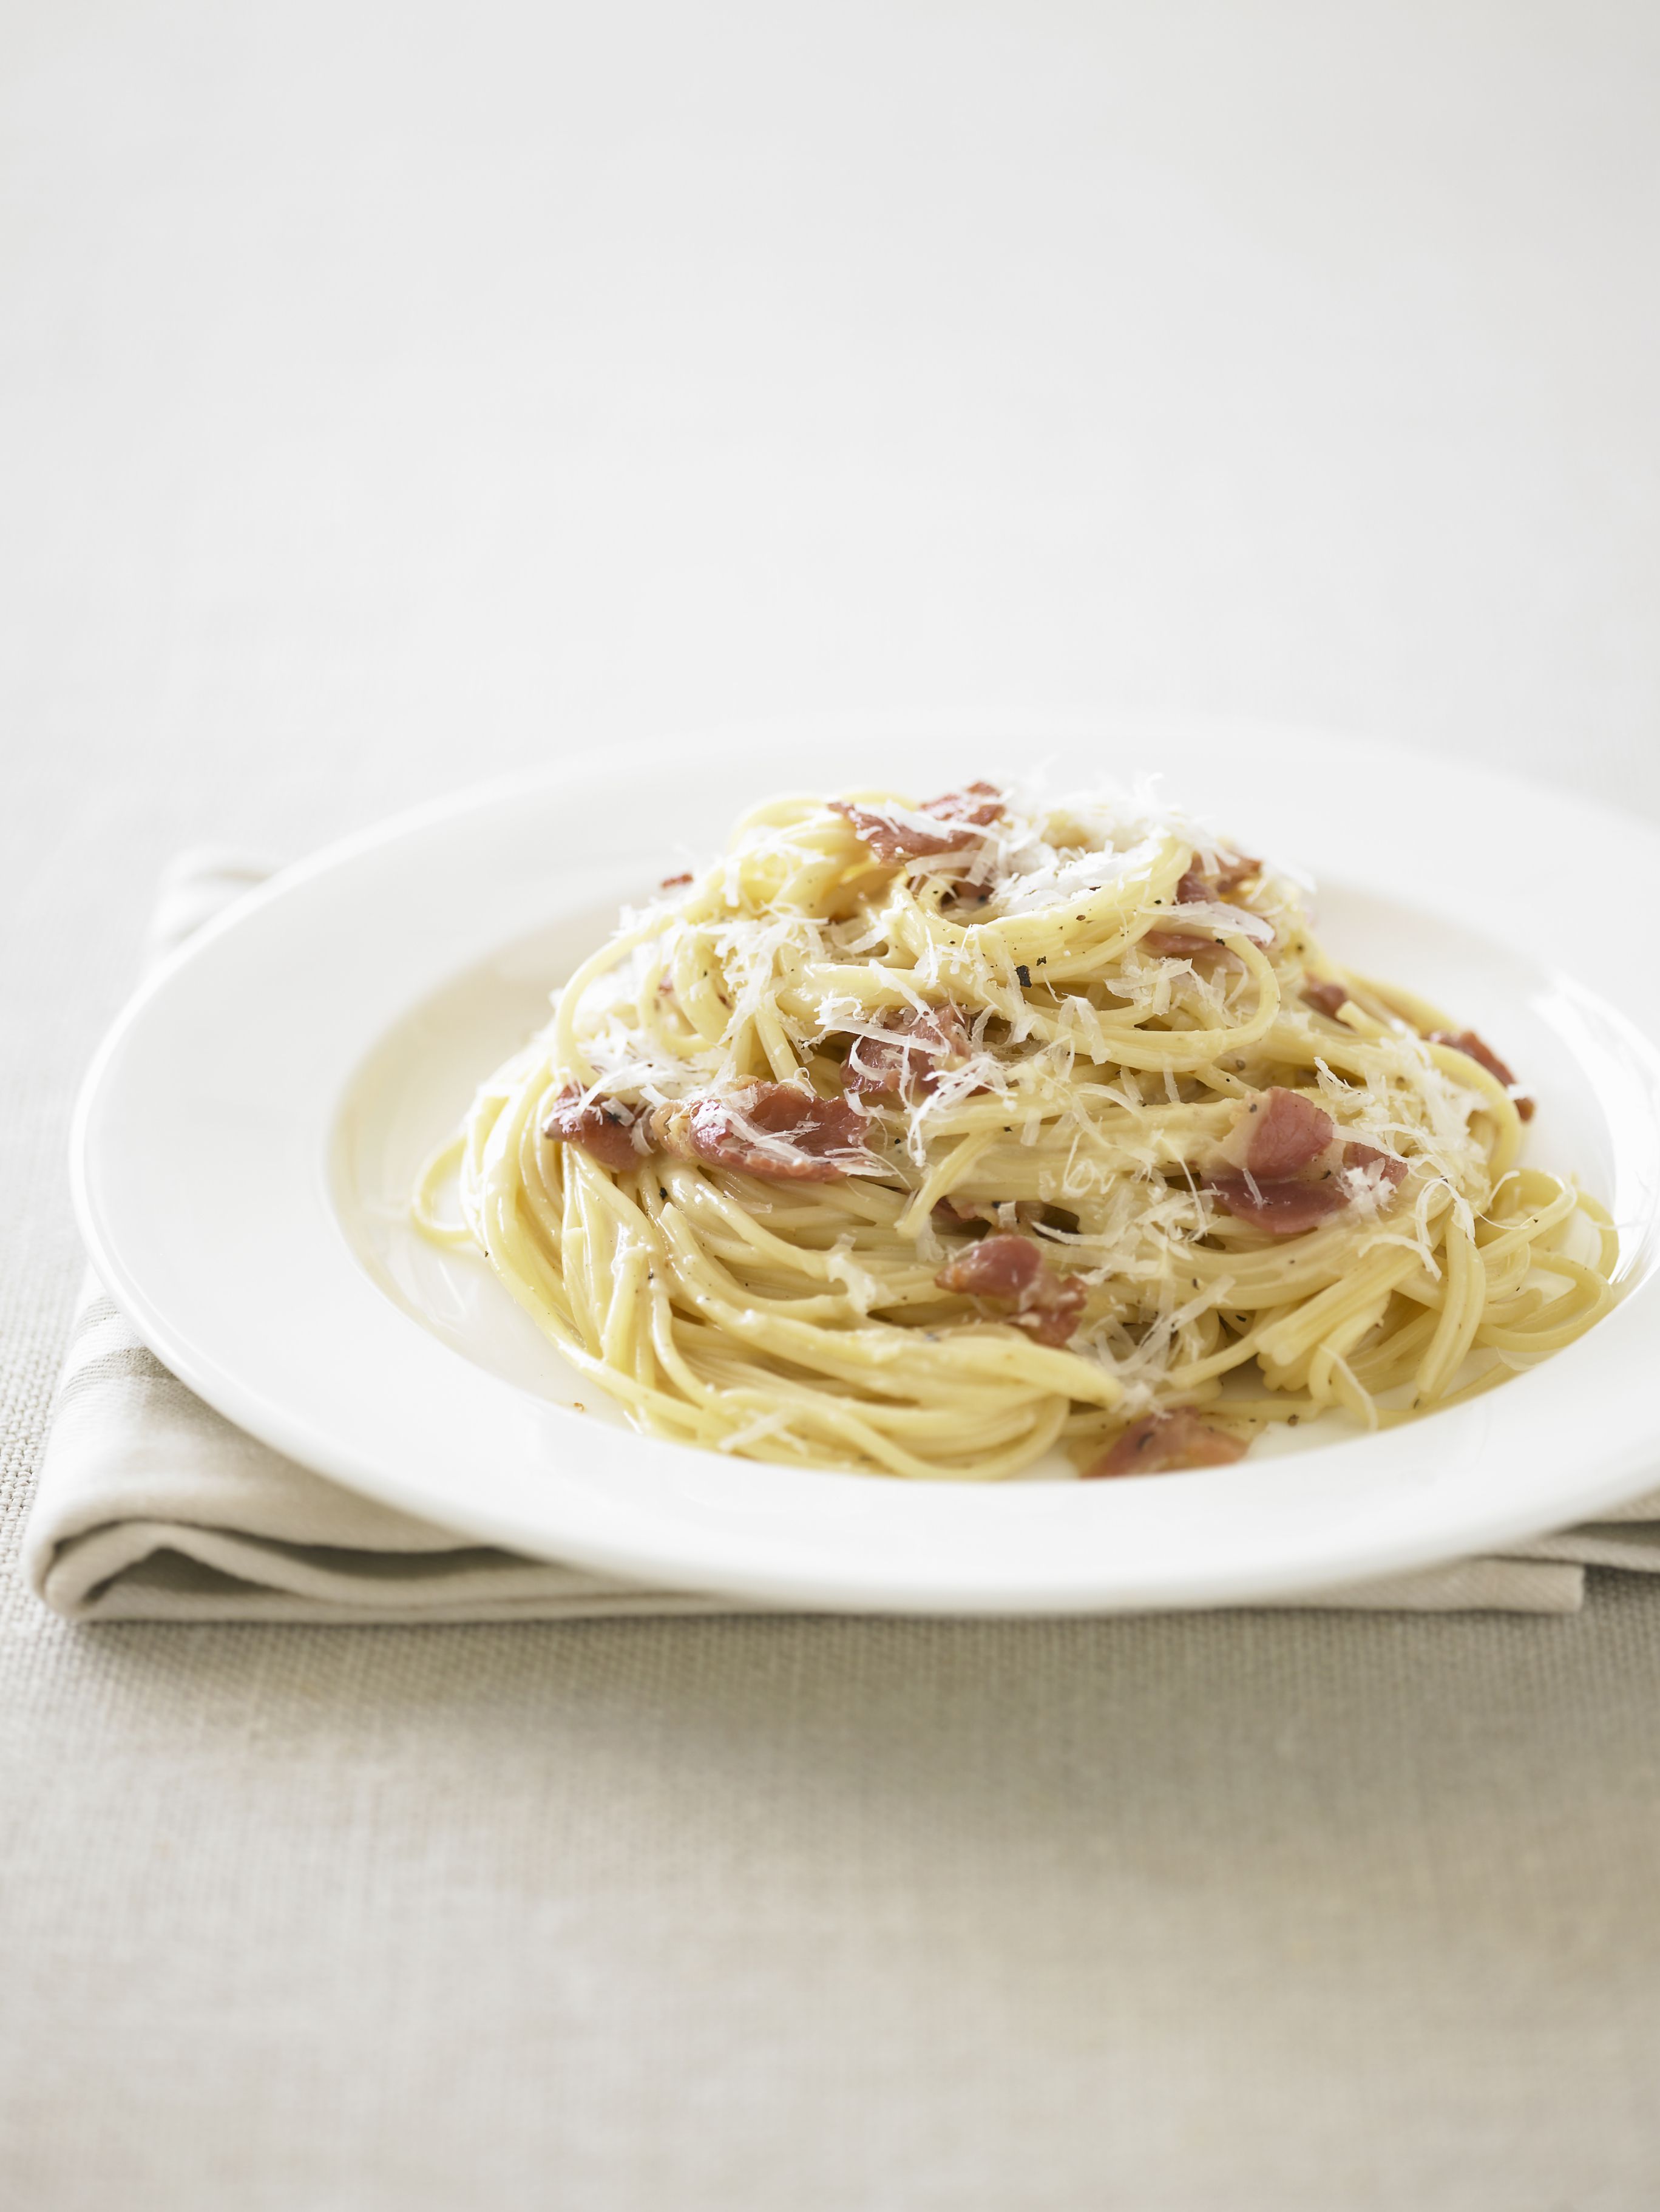 Best Spaghetti Carbonara Recipe - How to Make Spaghetti Carbonara Easily